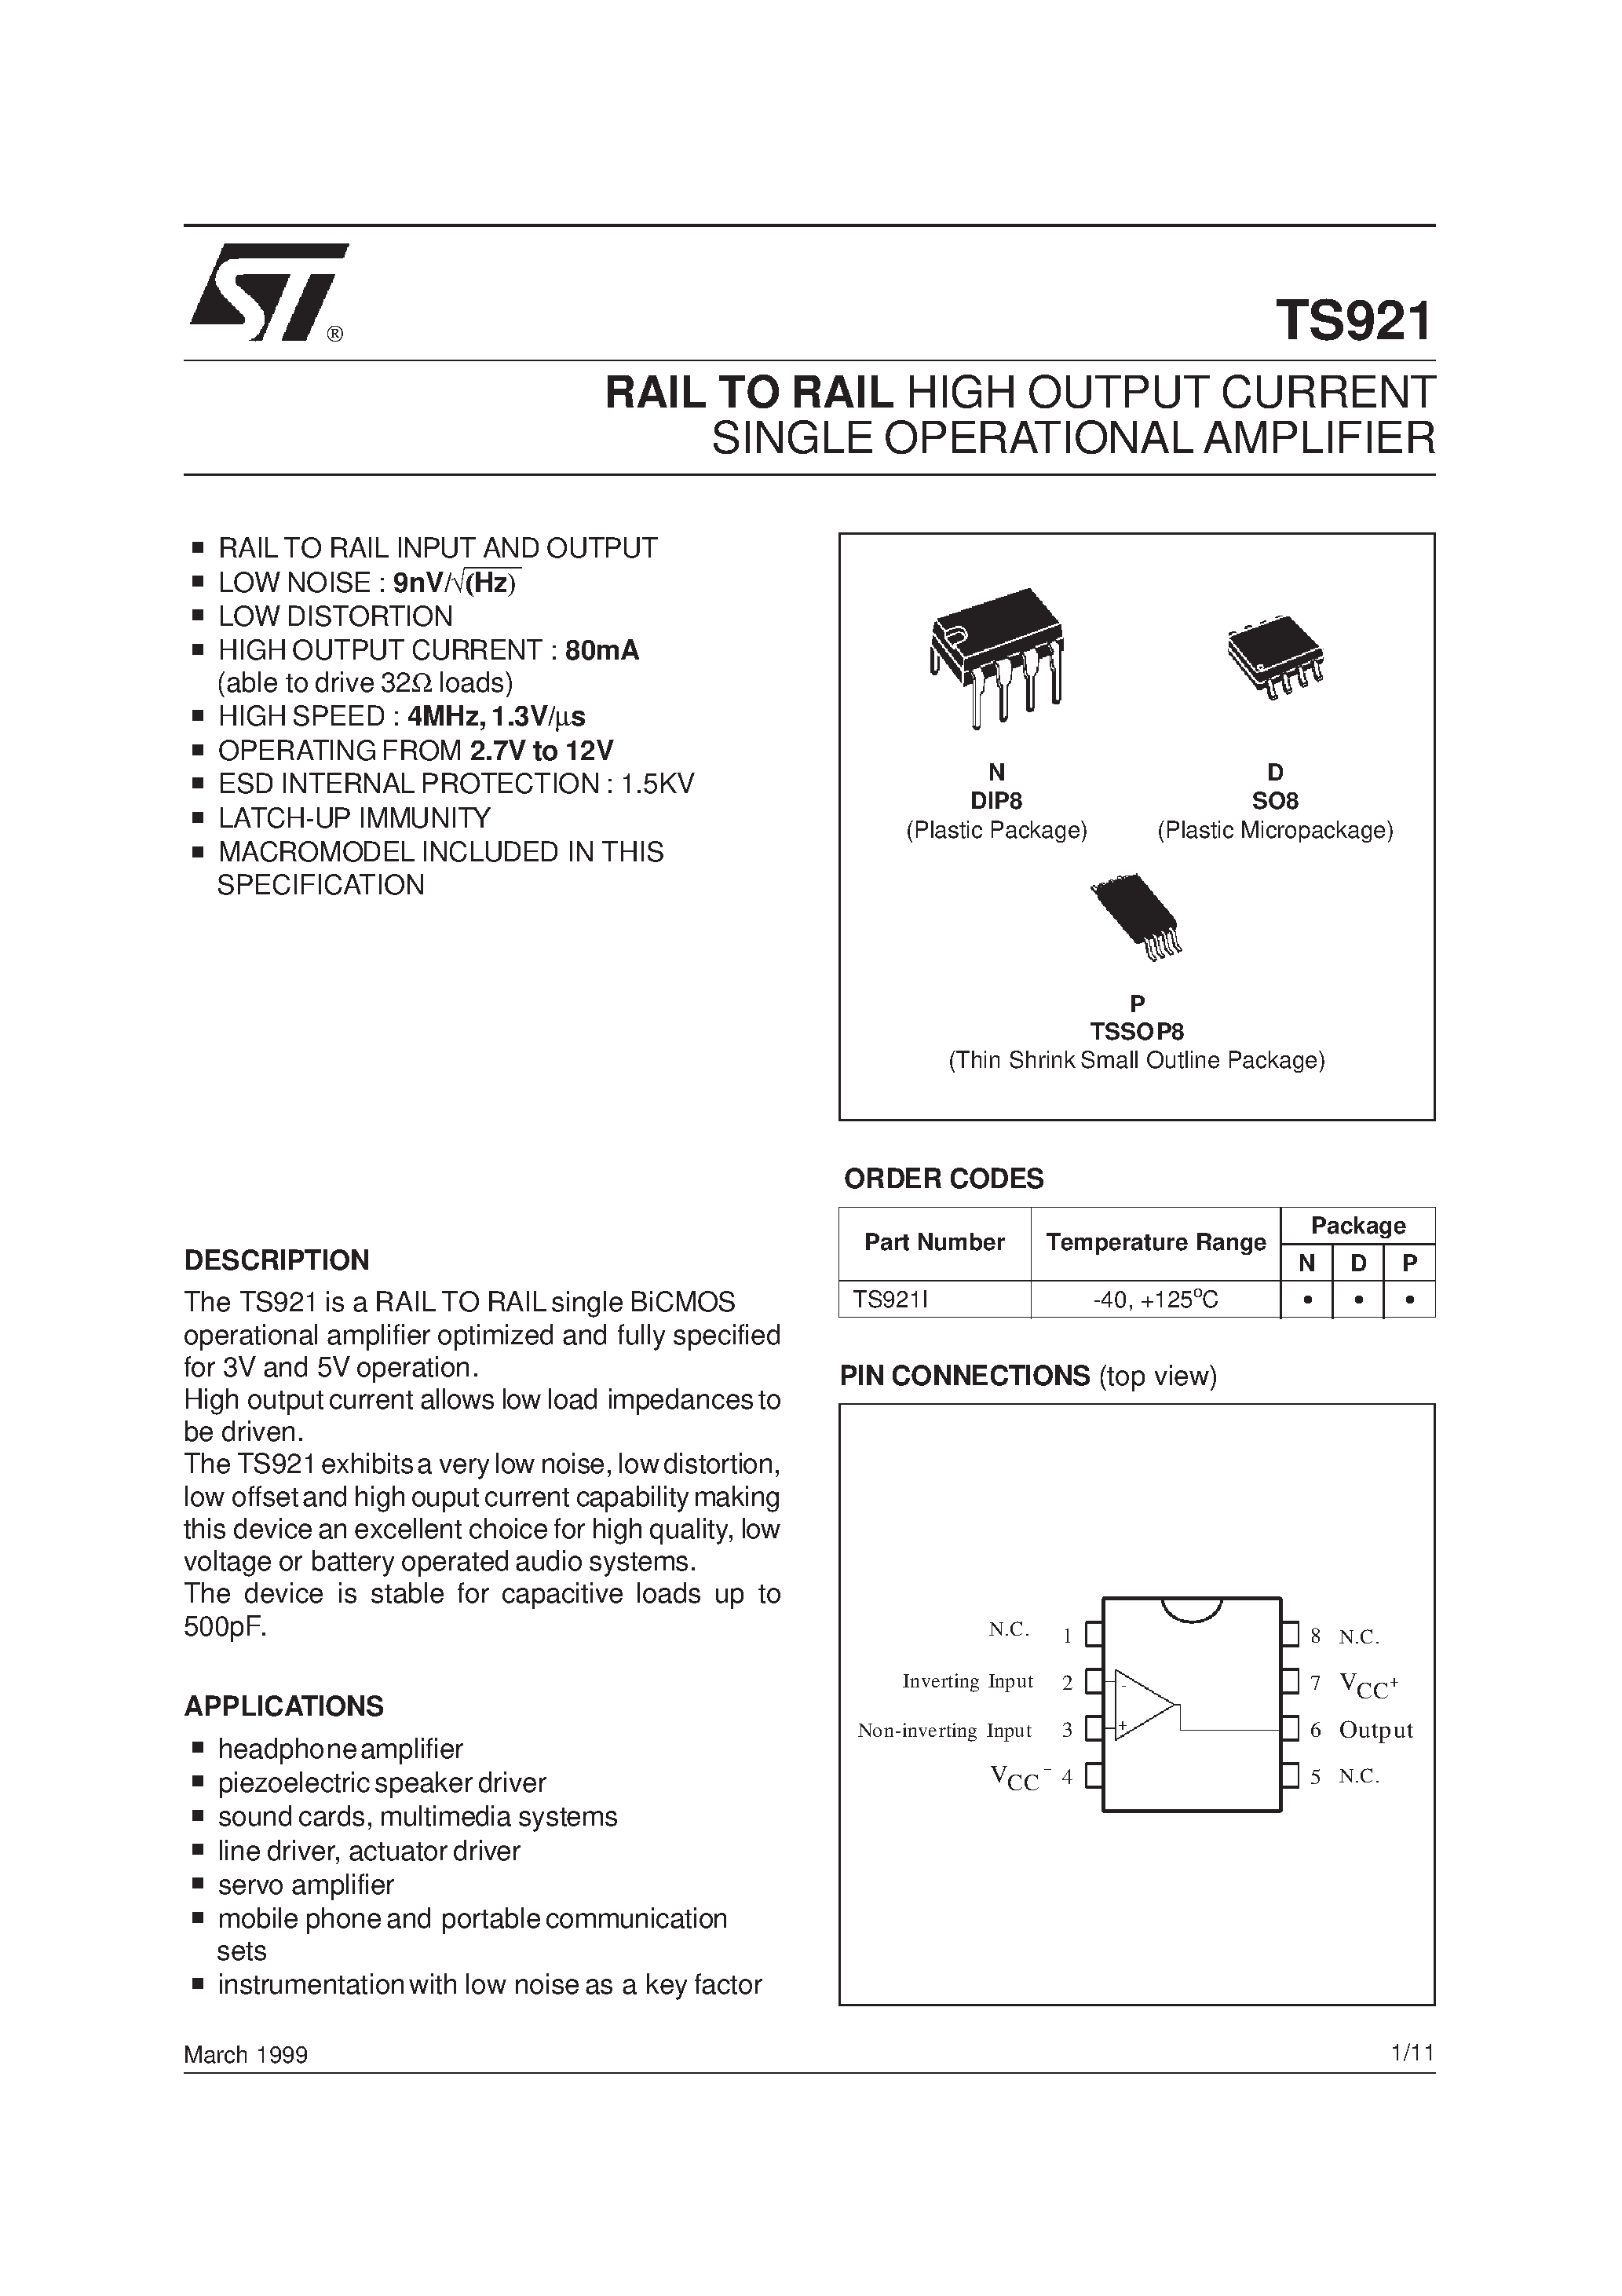 Даташит TS921 - RAIL TO RAIL HIGH OUTPUT CURRENT QUAD OPERATIONAL AMPLIFIER страница 1